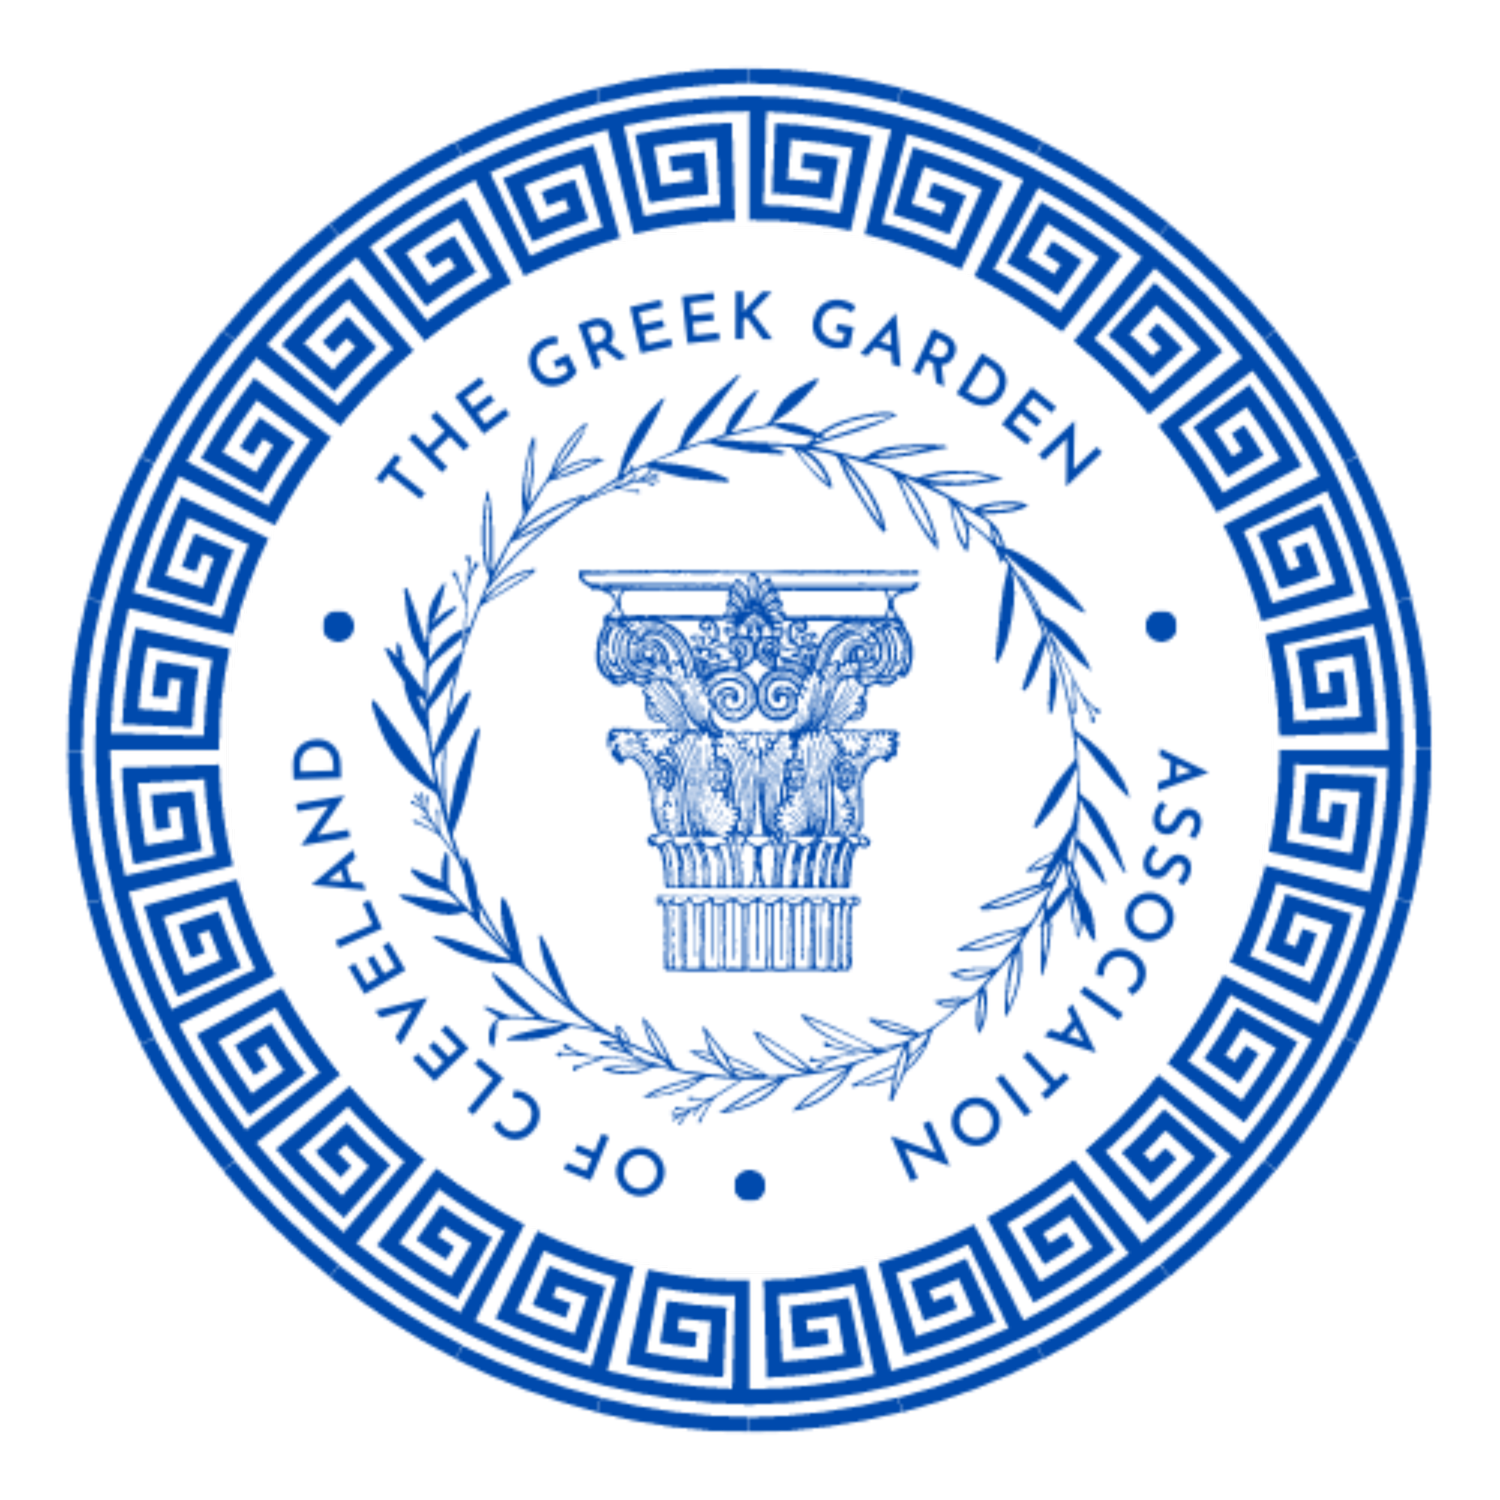 The Greek Cultural Garden